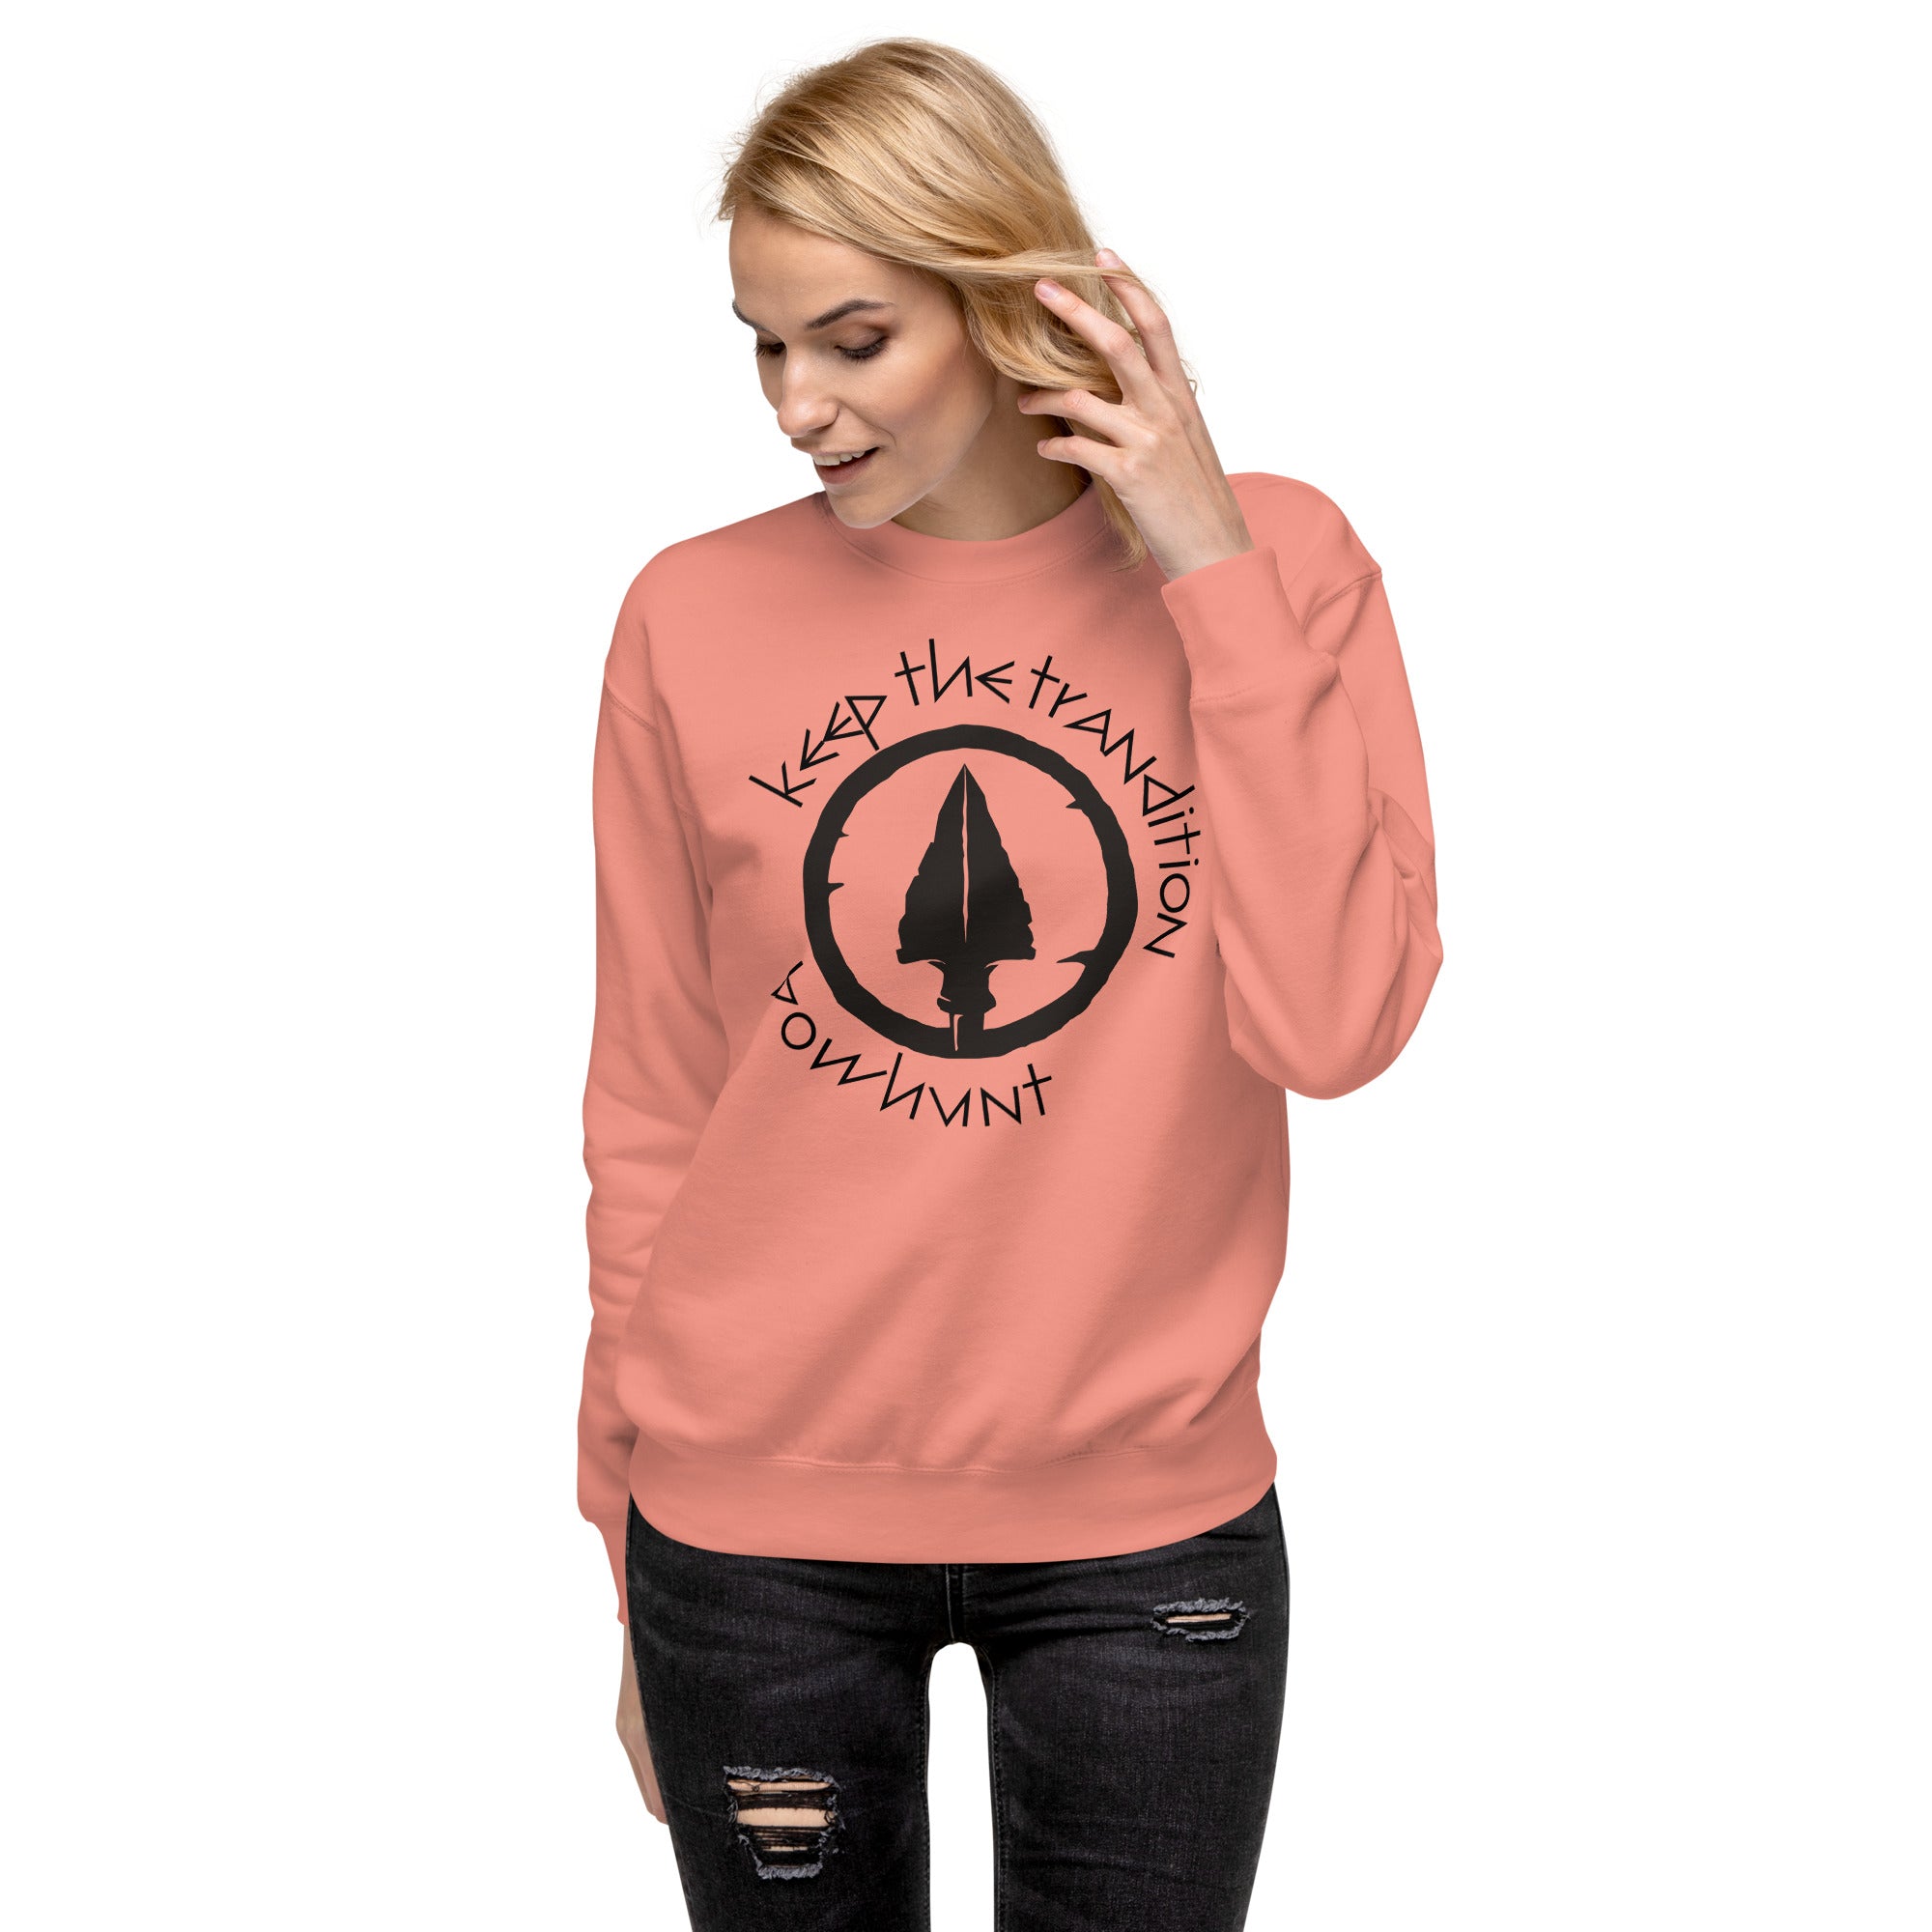 Keep The Tradition Women's Premium Sweatshirt - Bow Hunt